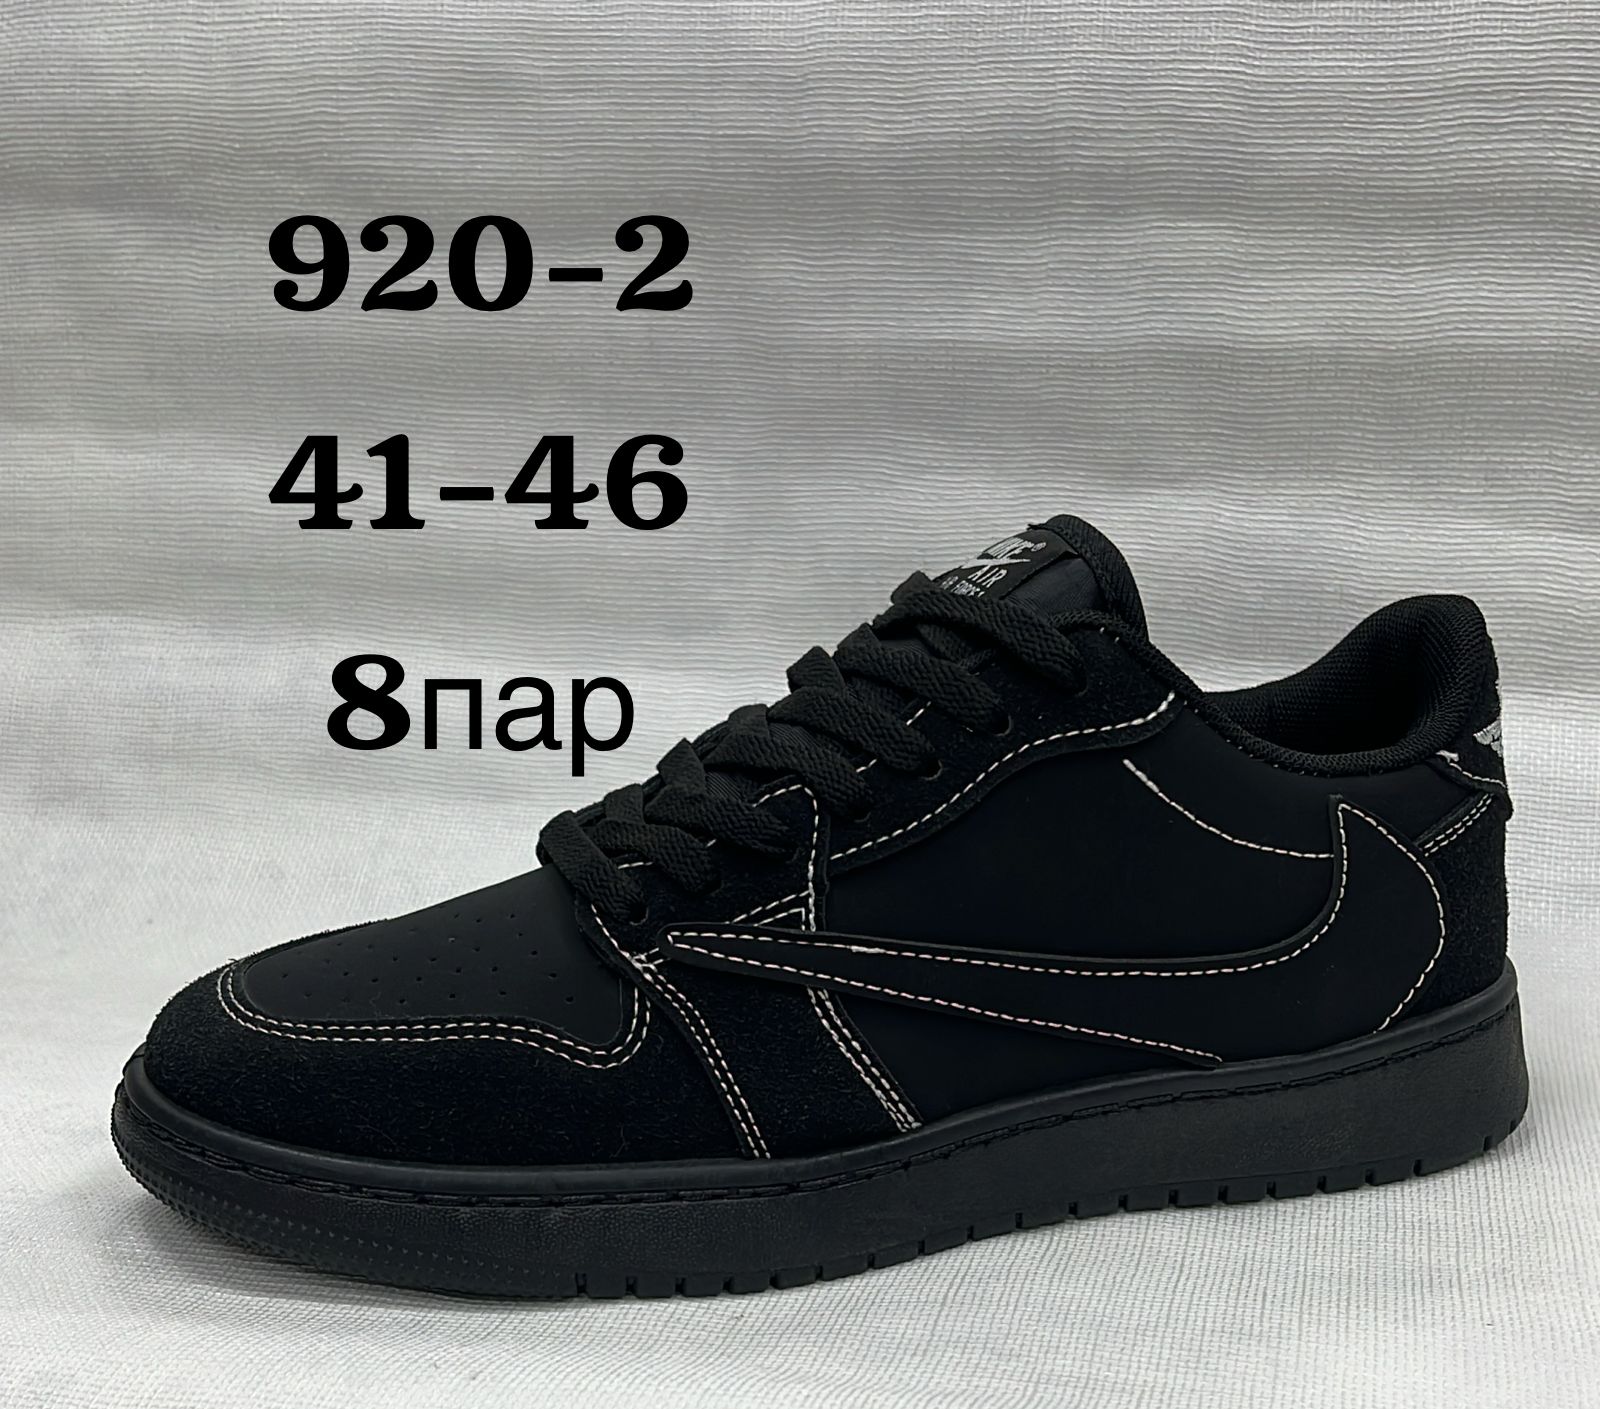 картинка Мужские весенние кроссовки SUFA SO-226-55 (8 пар в коробе, размер 41-46) от оптового интернет-магазина Shoesopt.by